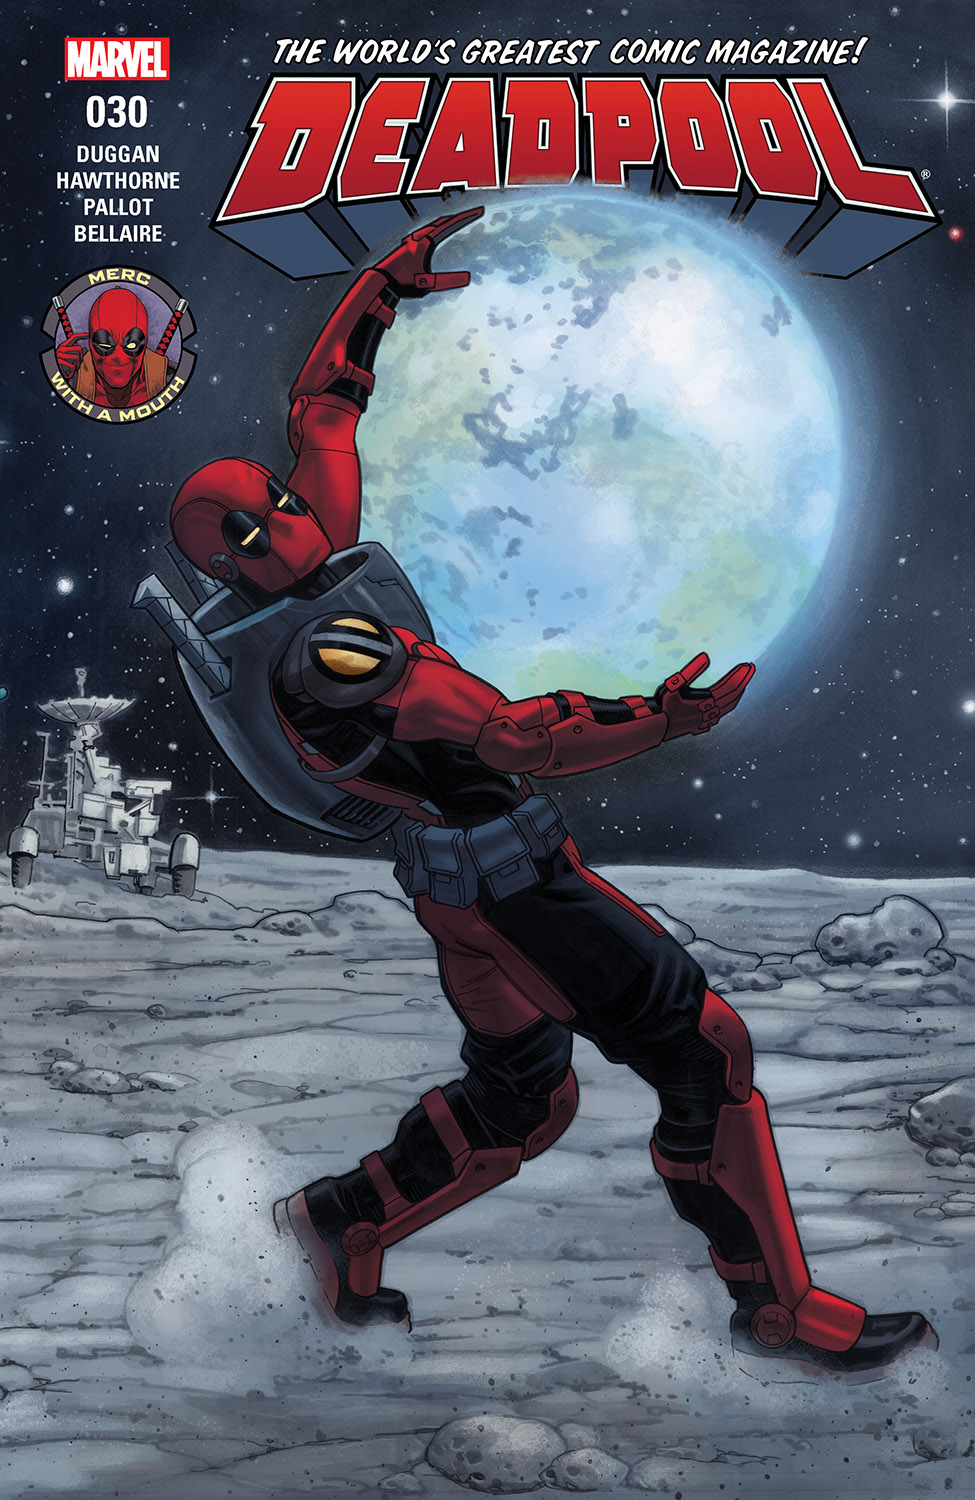 Deadpool (2015) #30